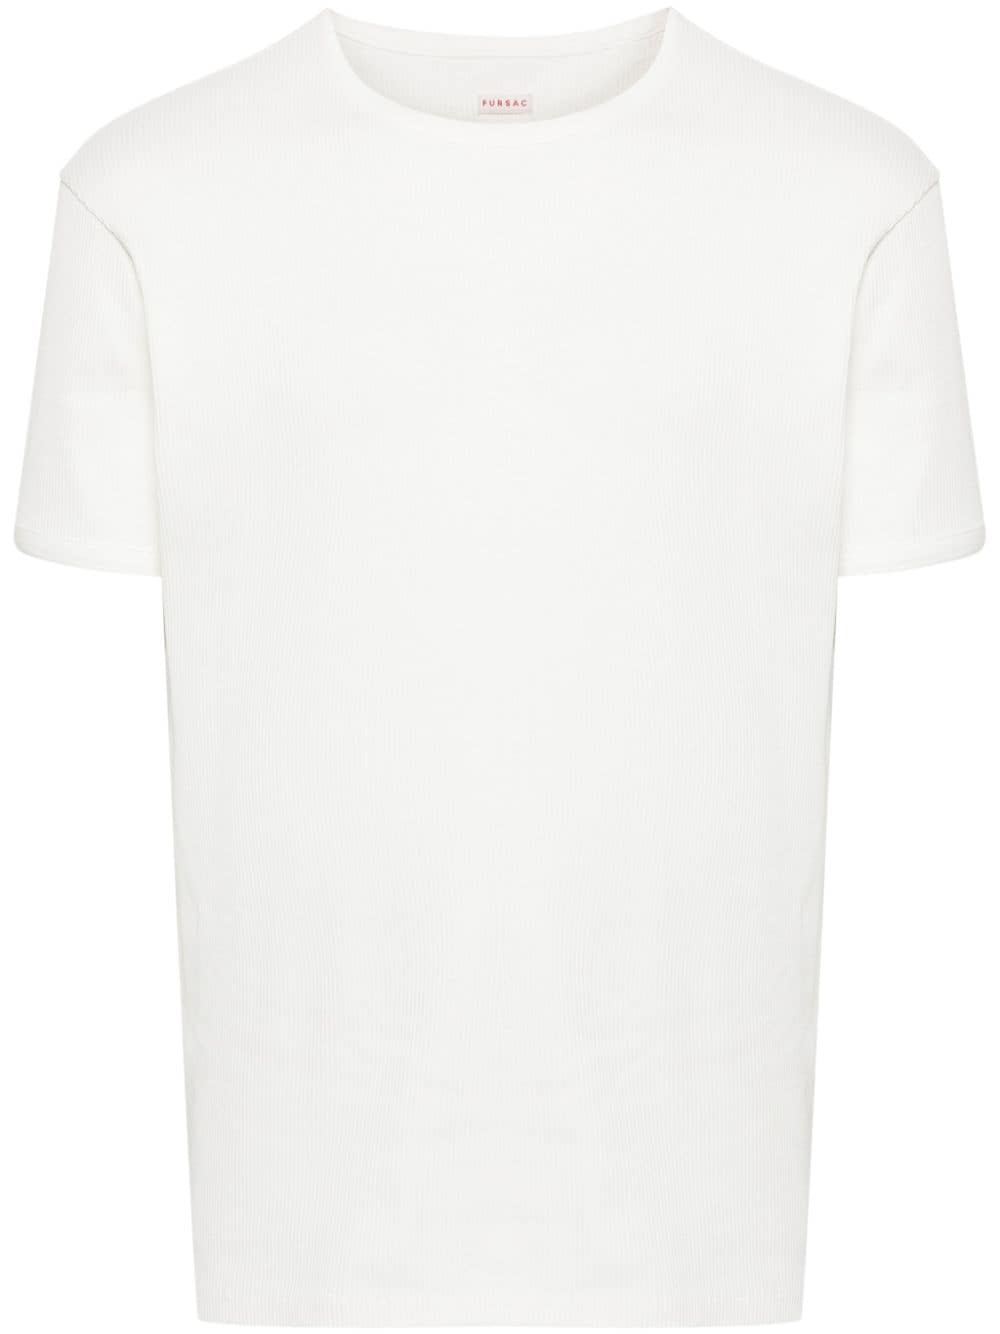 FURSAC ribbed-effect T-shirt - White von FURSAC